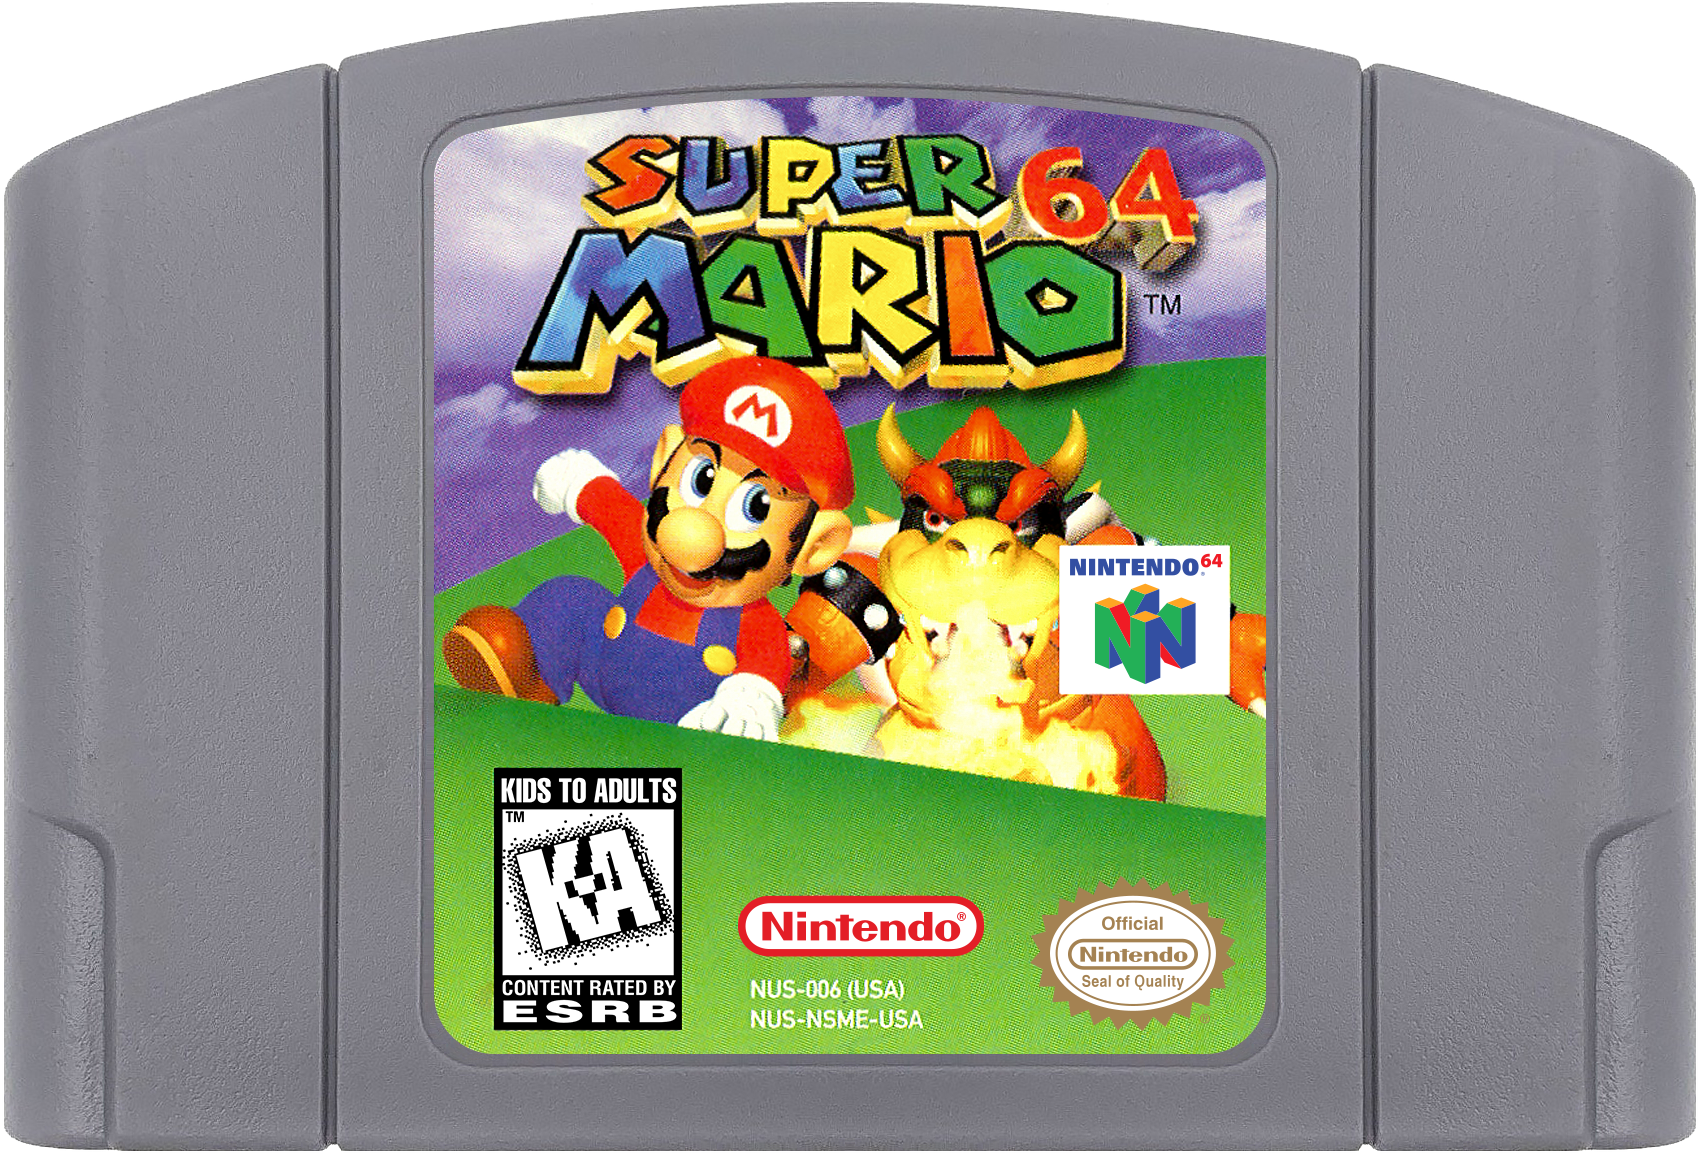 Super nintendo 64 игры. Картридж Нинтендо 64. Nintendo 64 Cartridge. Super Mario 64 Nintendo 64. Mario 64 Nintendo 64 Cartridge.